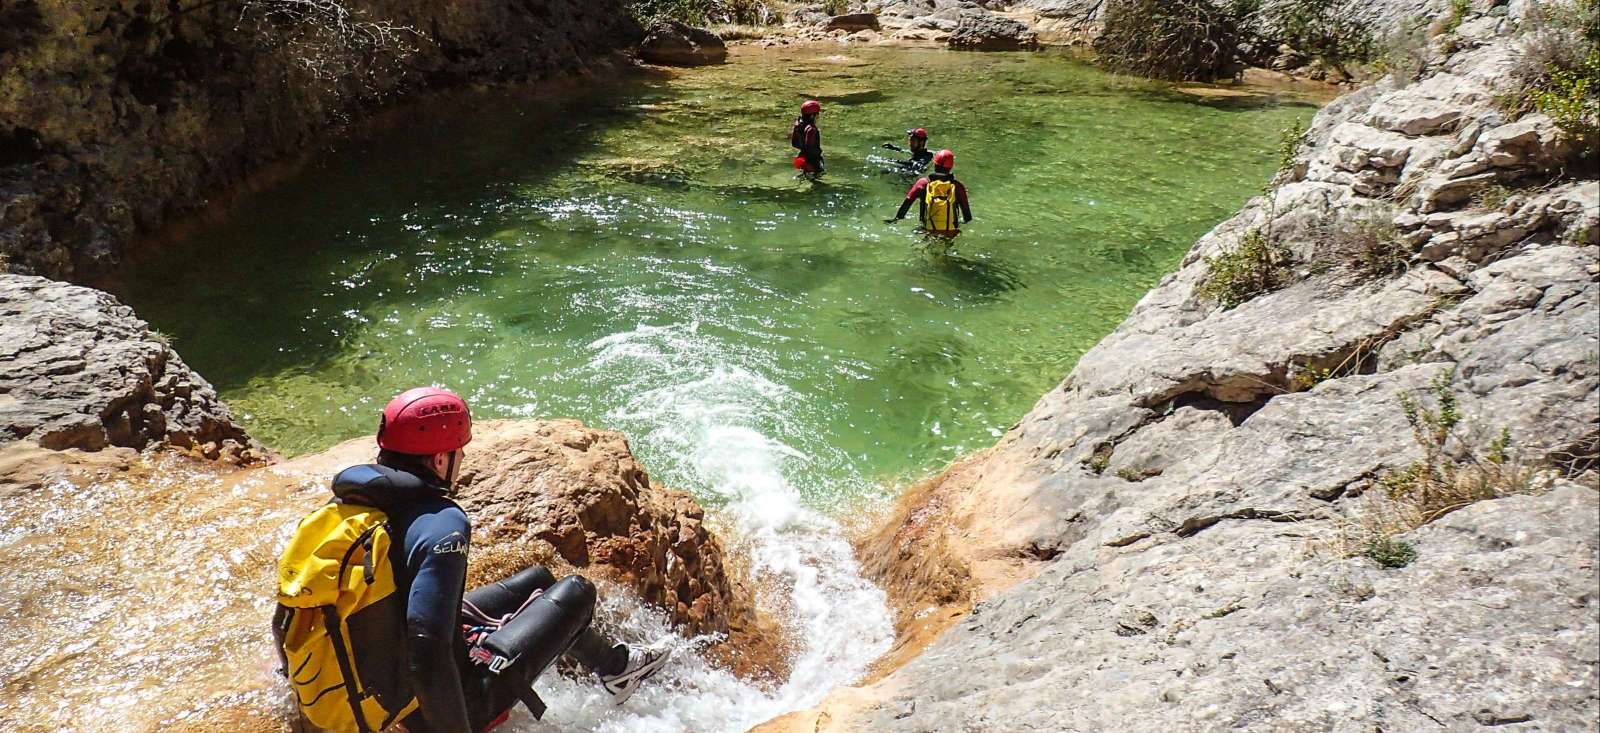 Voyage sur l'eau : Canyoning en Sierra de Guara, version camping